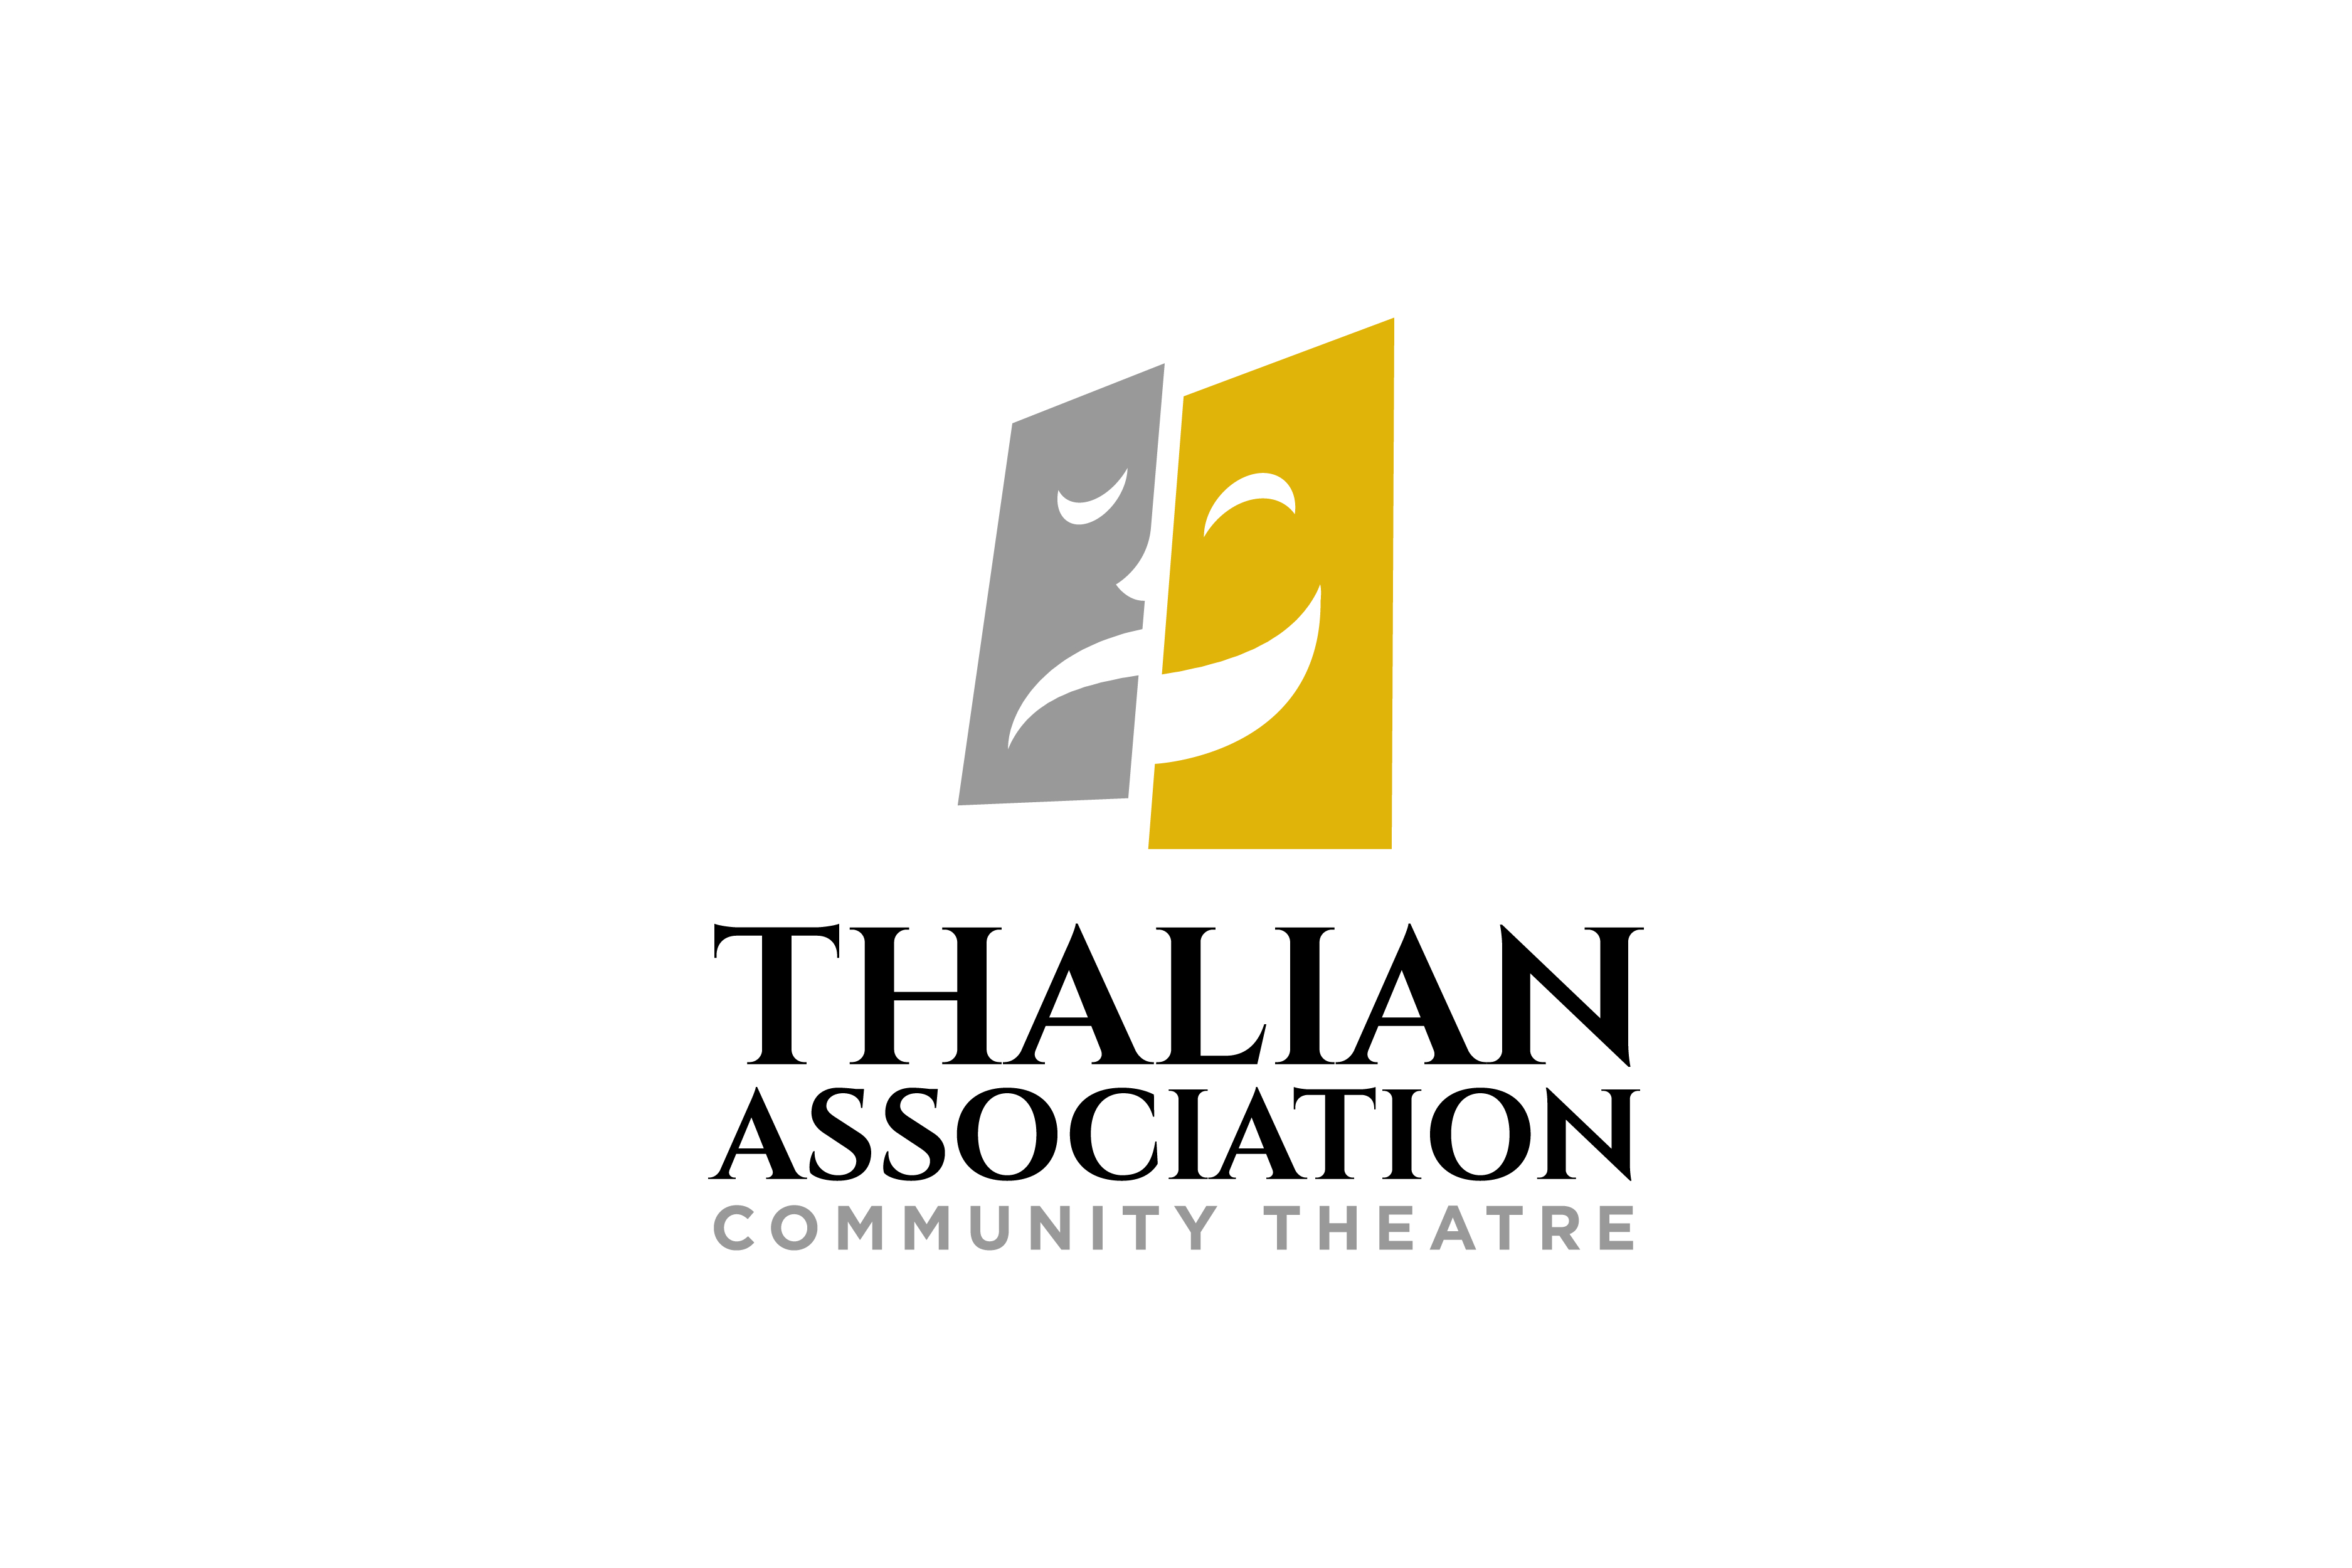 New Thalian Association Community Theatre